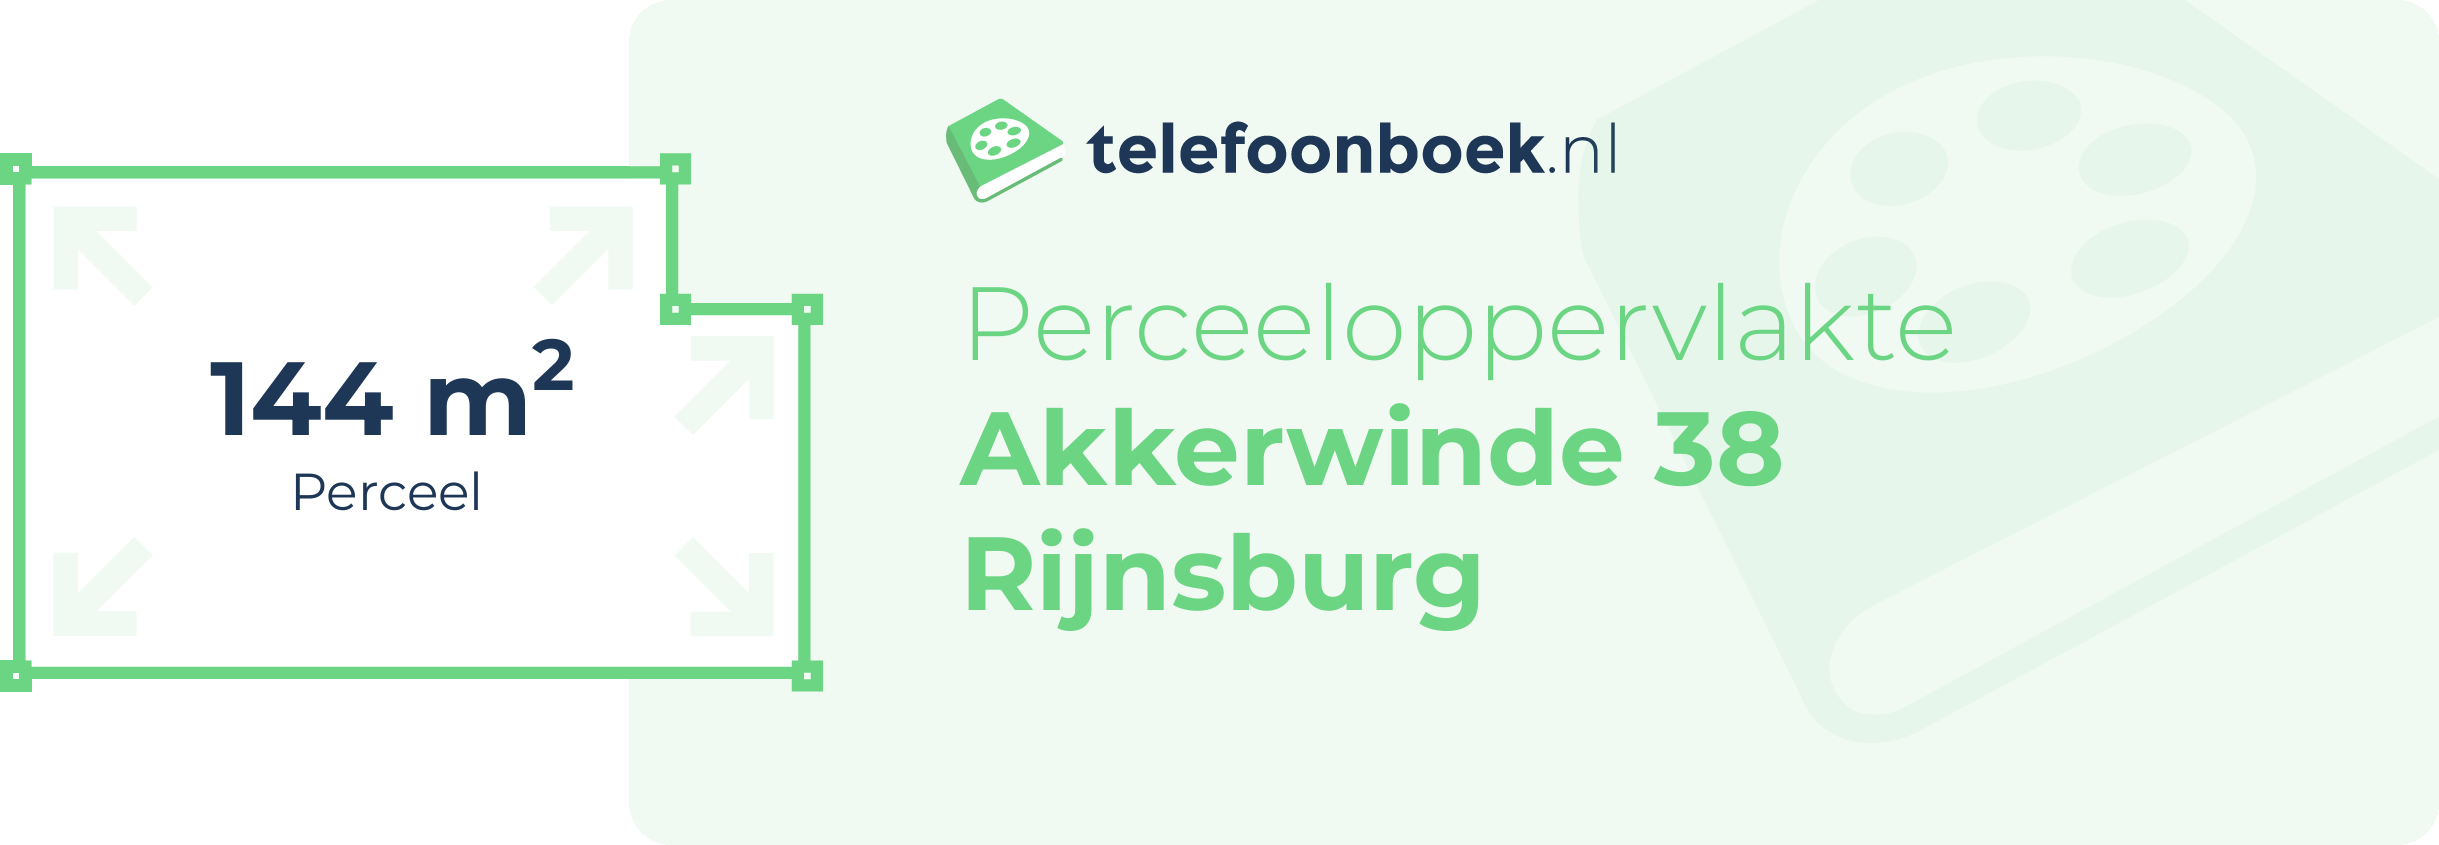 Perceeloppervlakte Akkerwinde 38 Rijnsburg